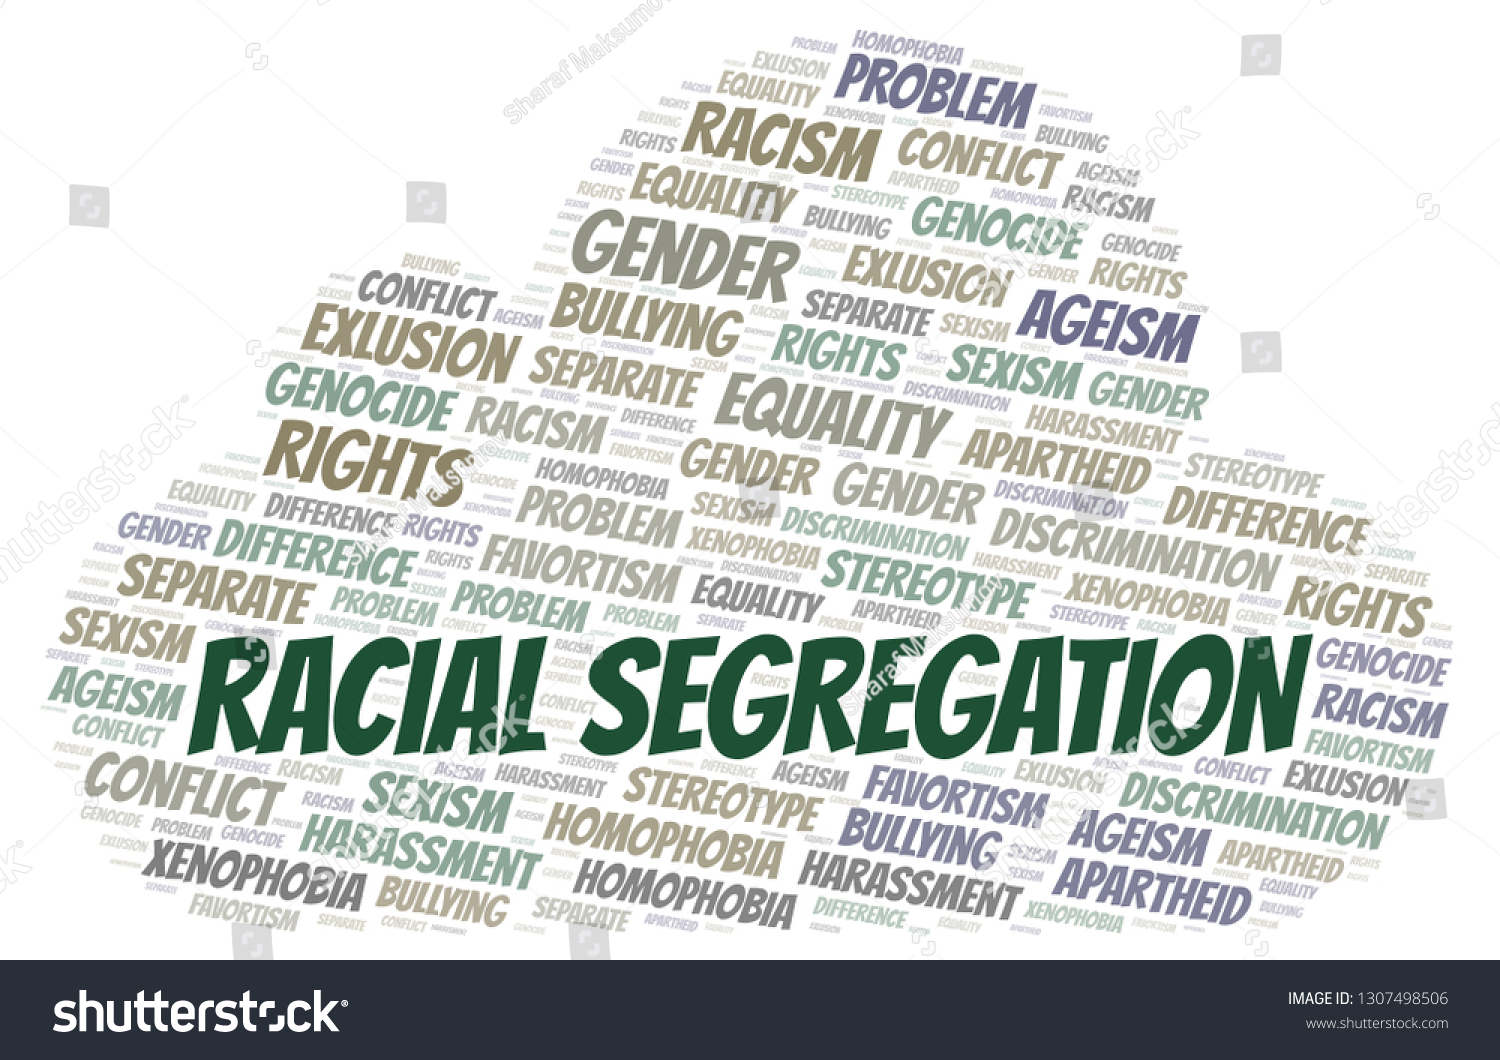 Racial Segregation Type Discrimination Word Cloud Stock Illustration 1307498506 Shutterstock 0520